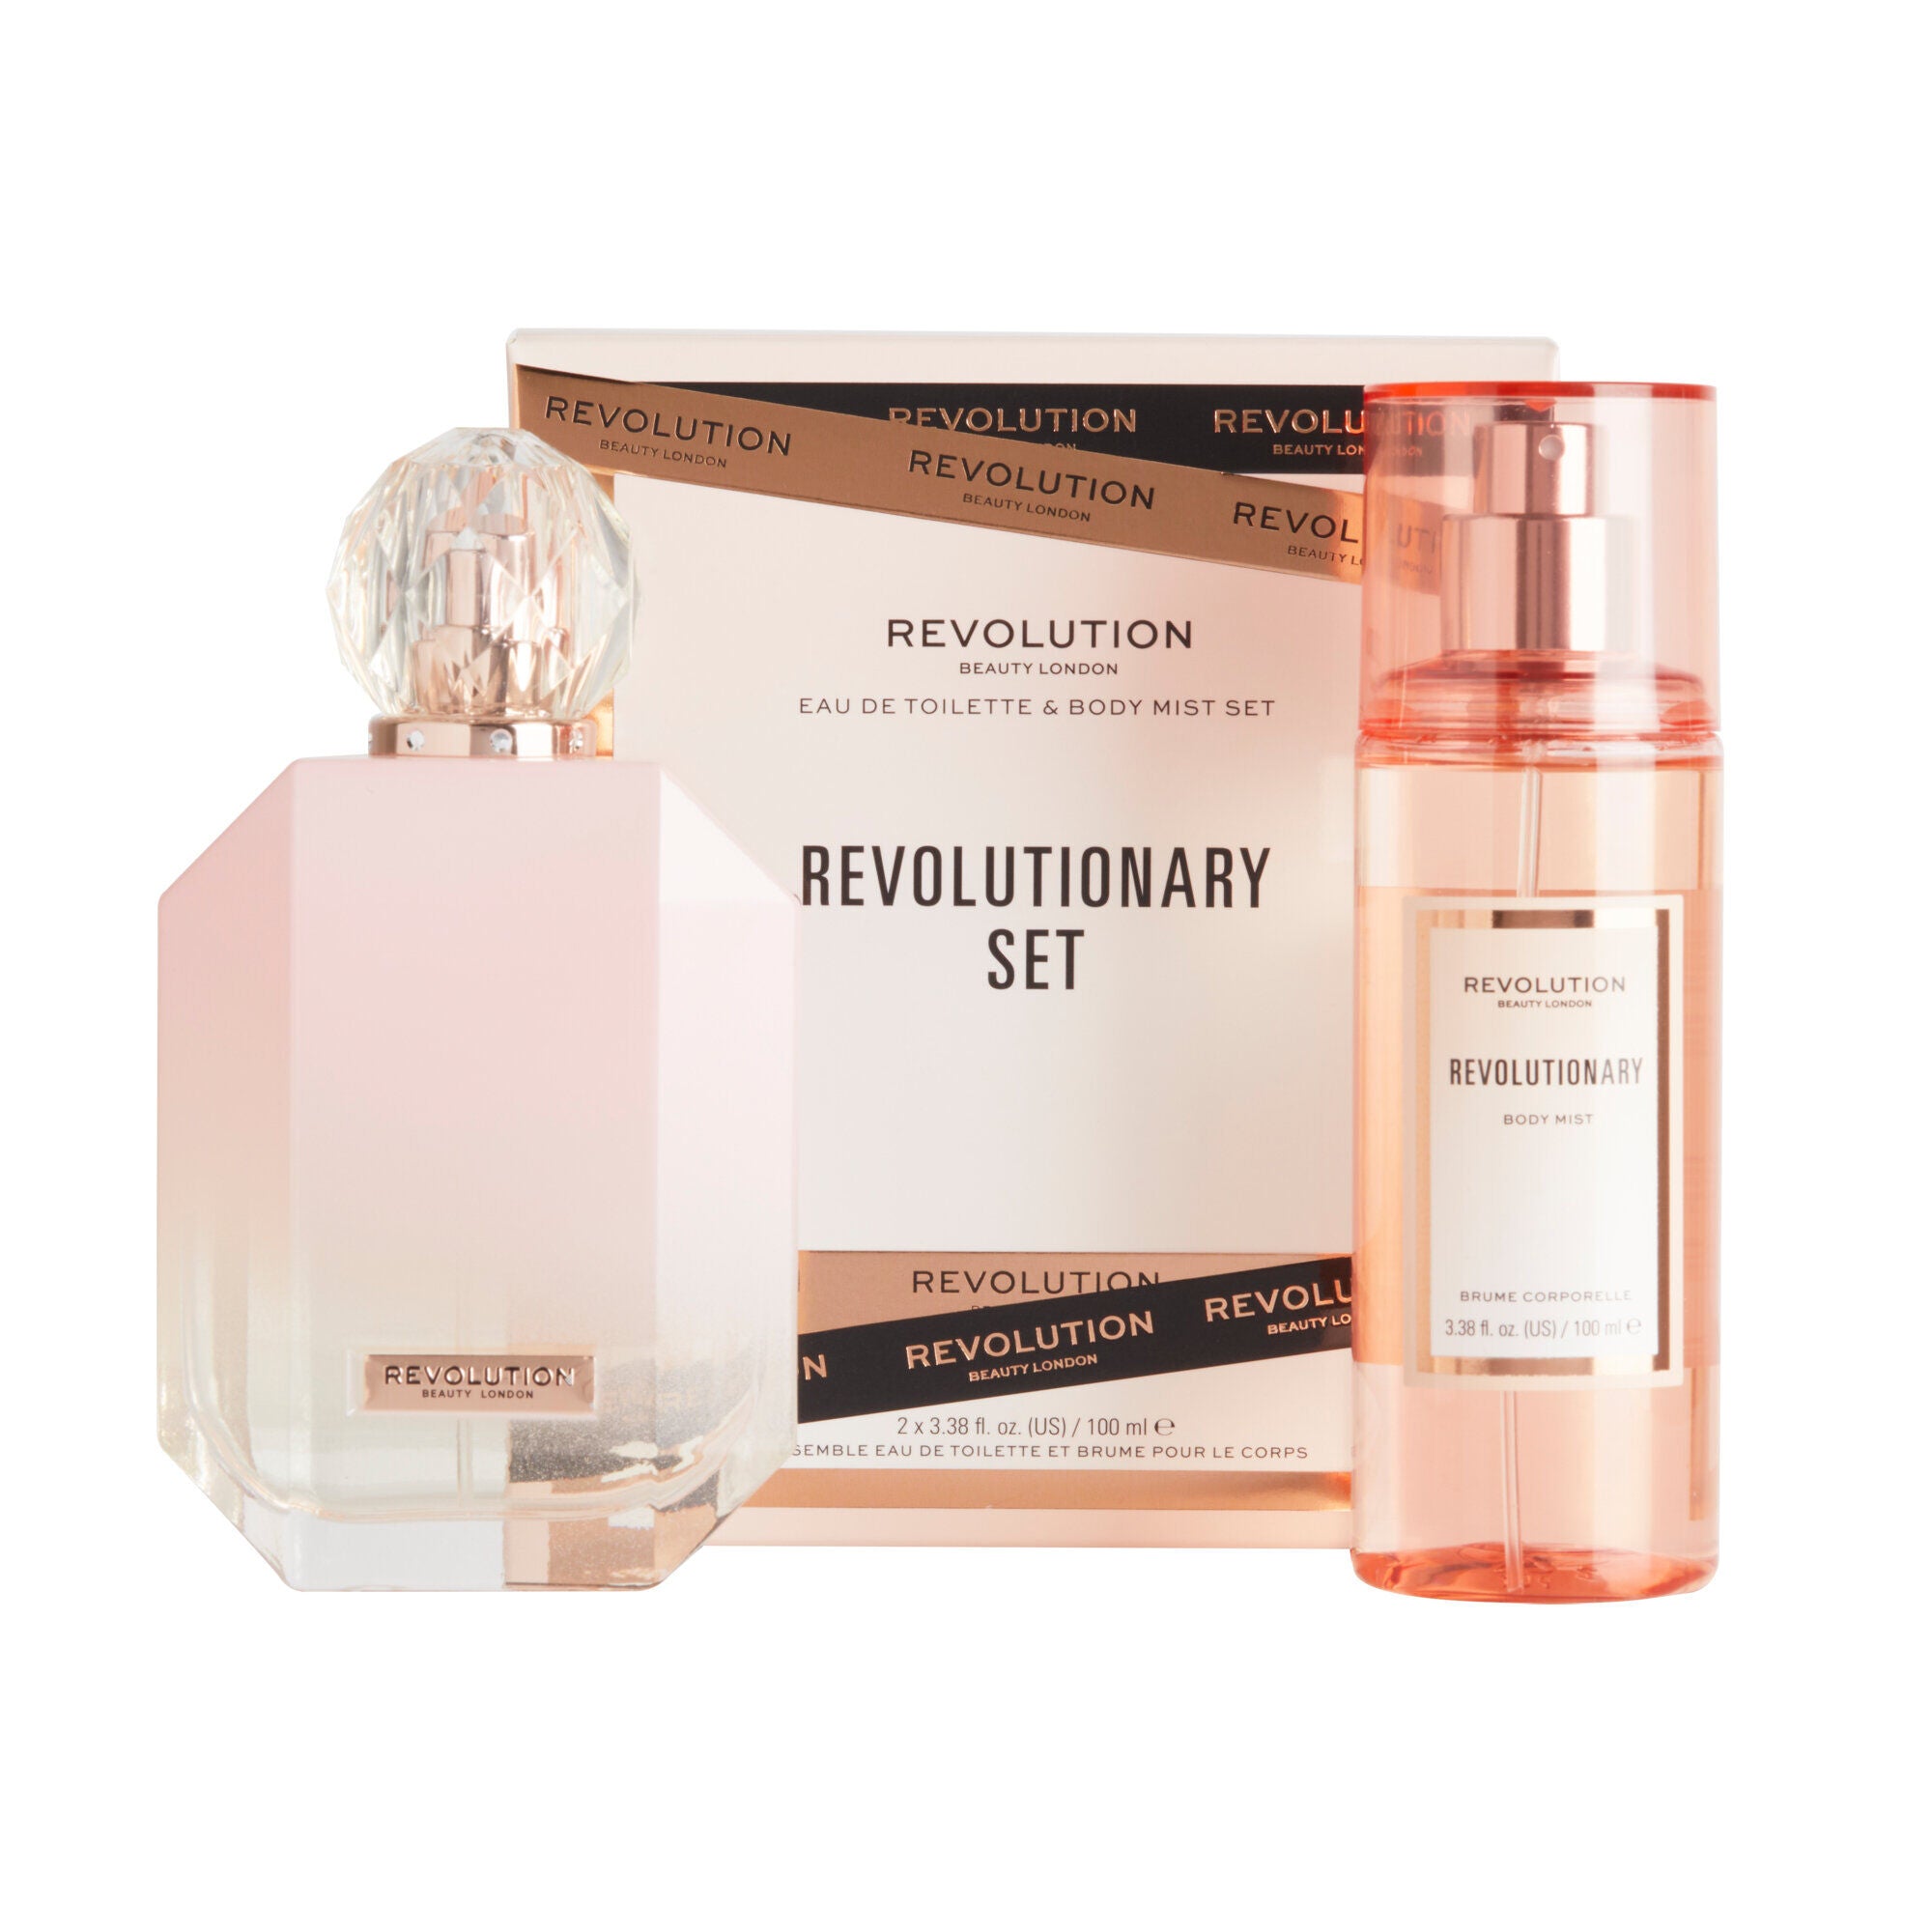 Makeup Revolution Revolutionary Set Eau De Toilette & Body Mist Gift Set, products and packaging